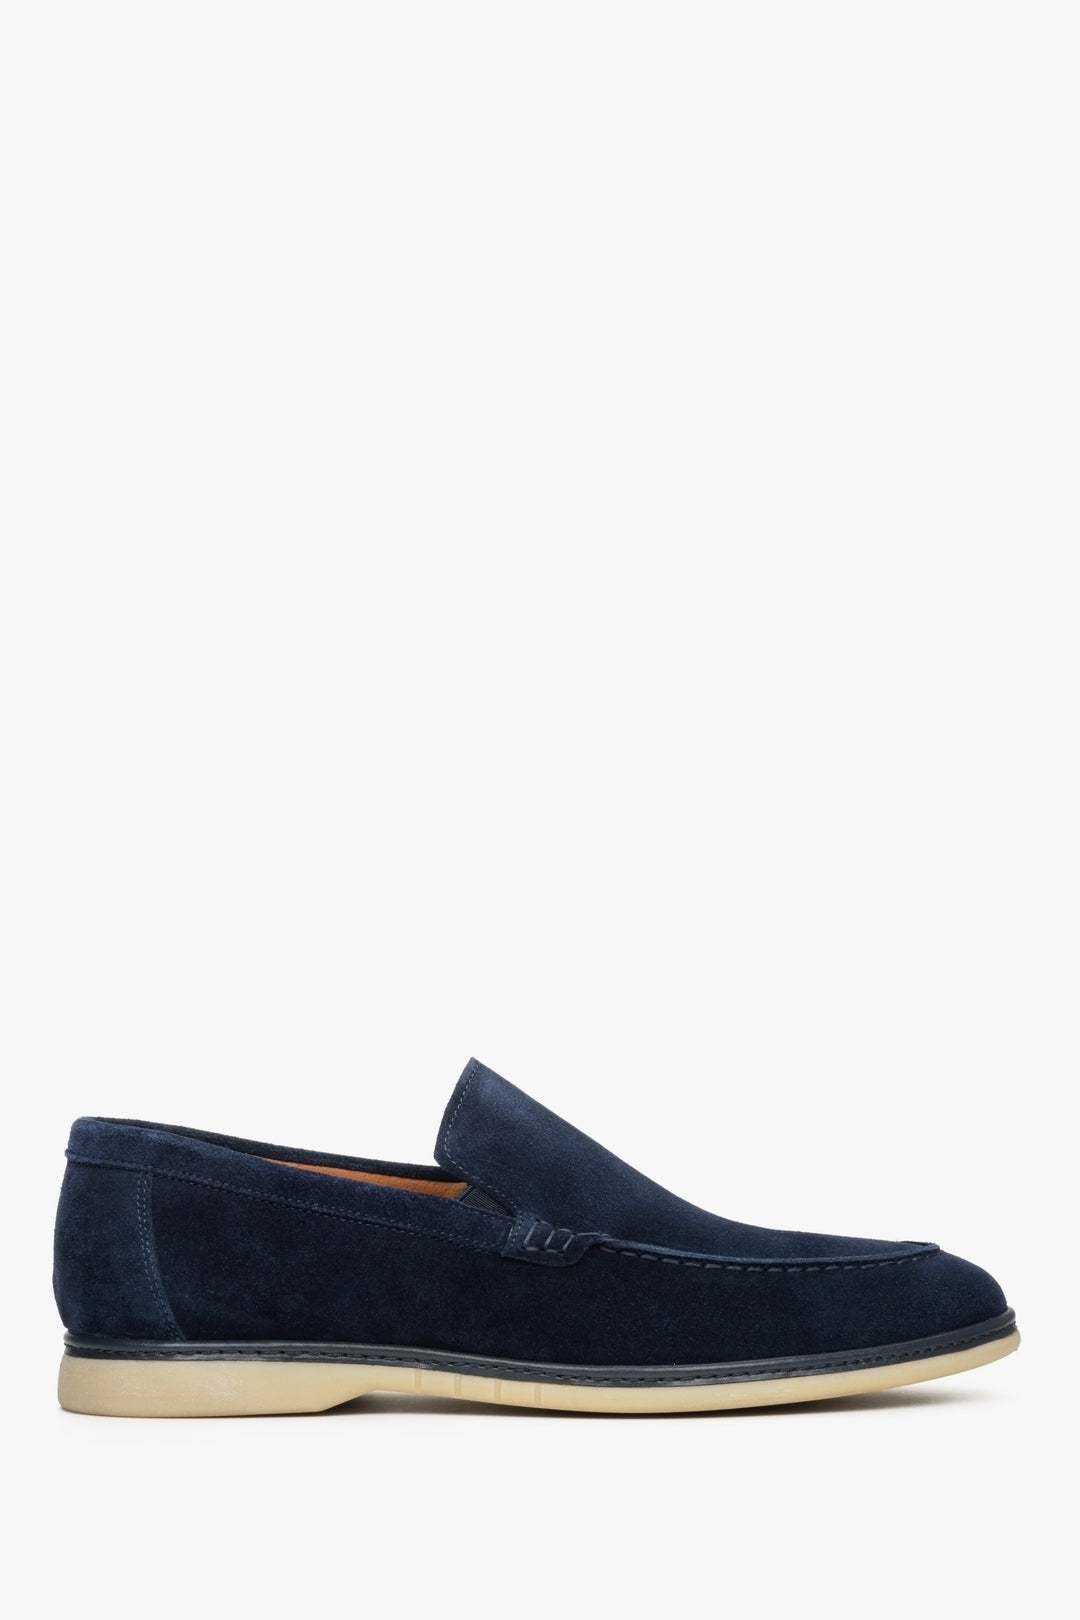 Men's navy blue velour loafers - shoe profile.